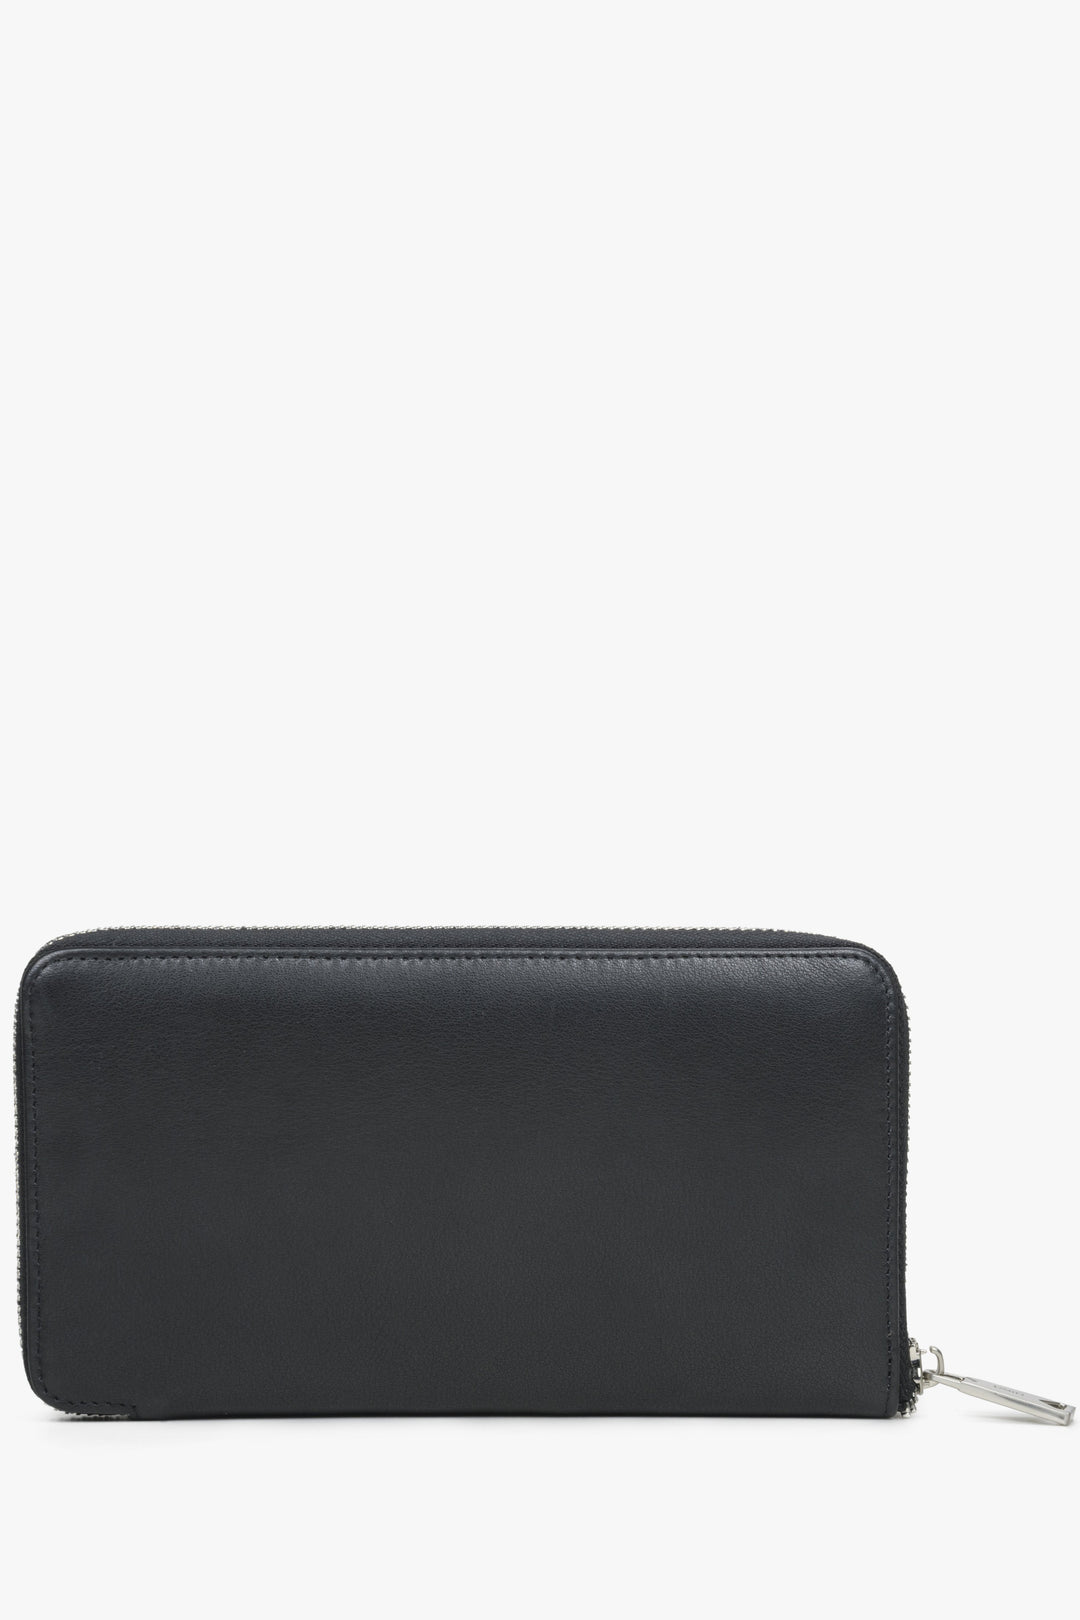 A capacious Estro men's leather wallet - back model.